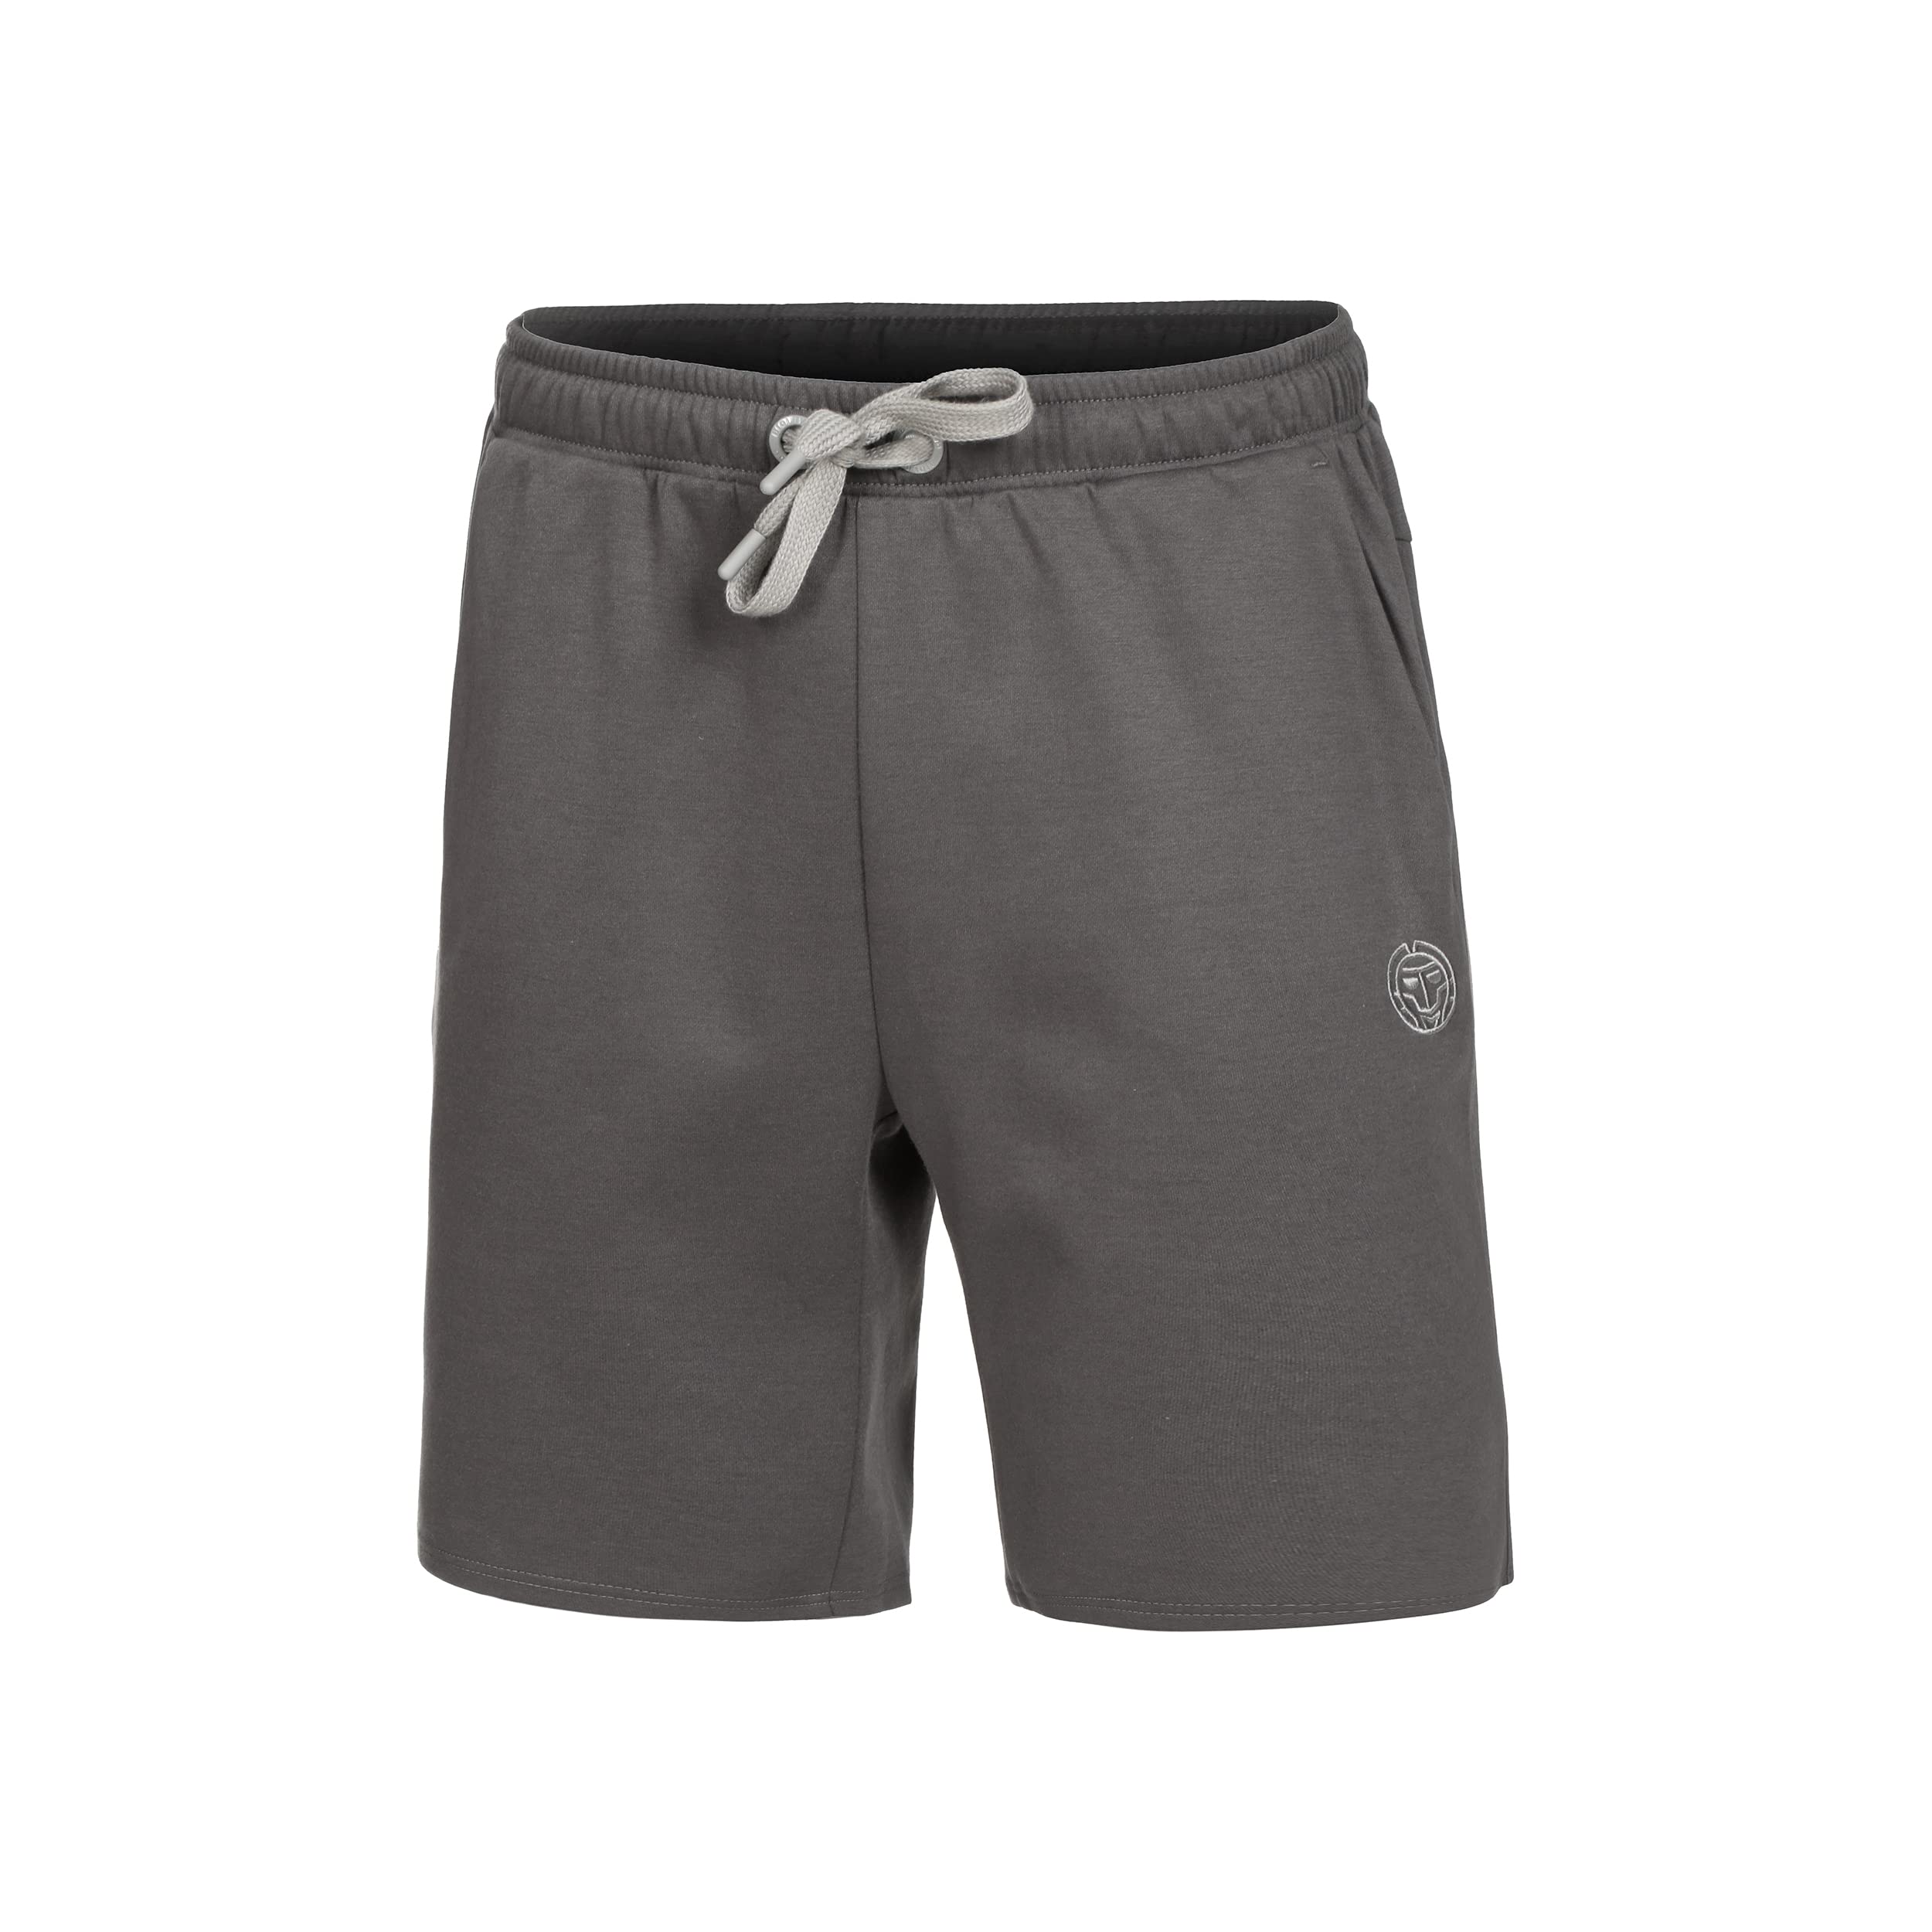 BIDI BADU Herren Crew 9Inch Shorts - Grey, Größe:L